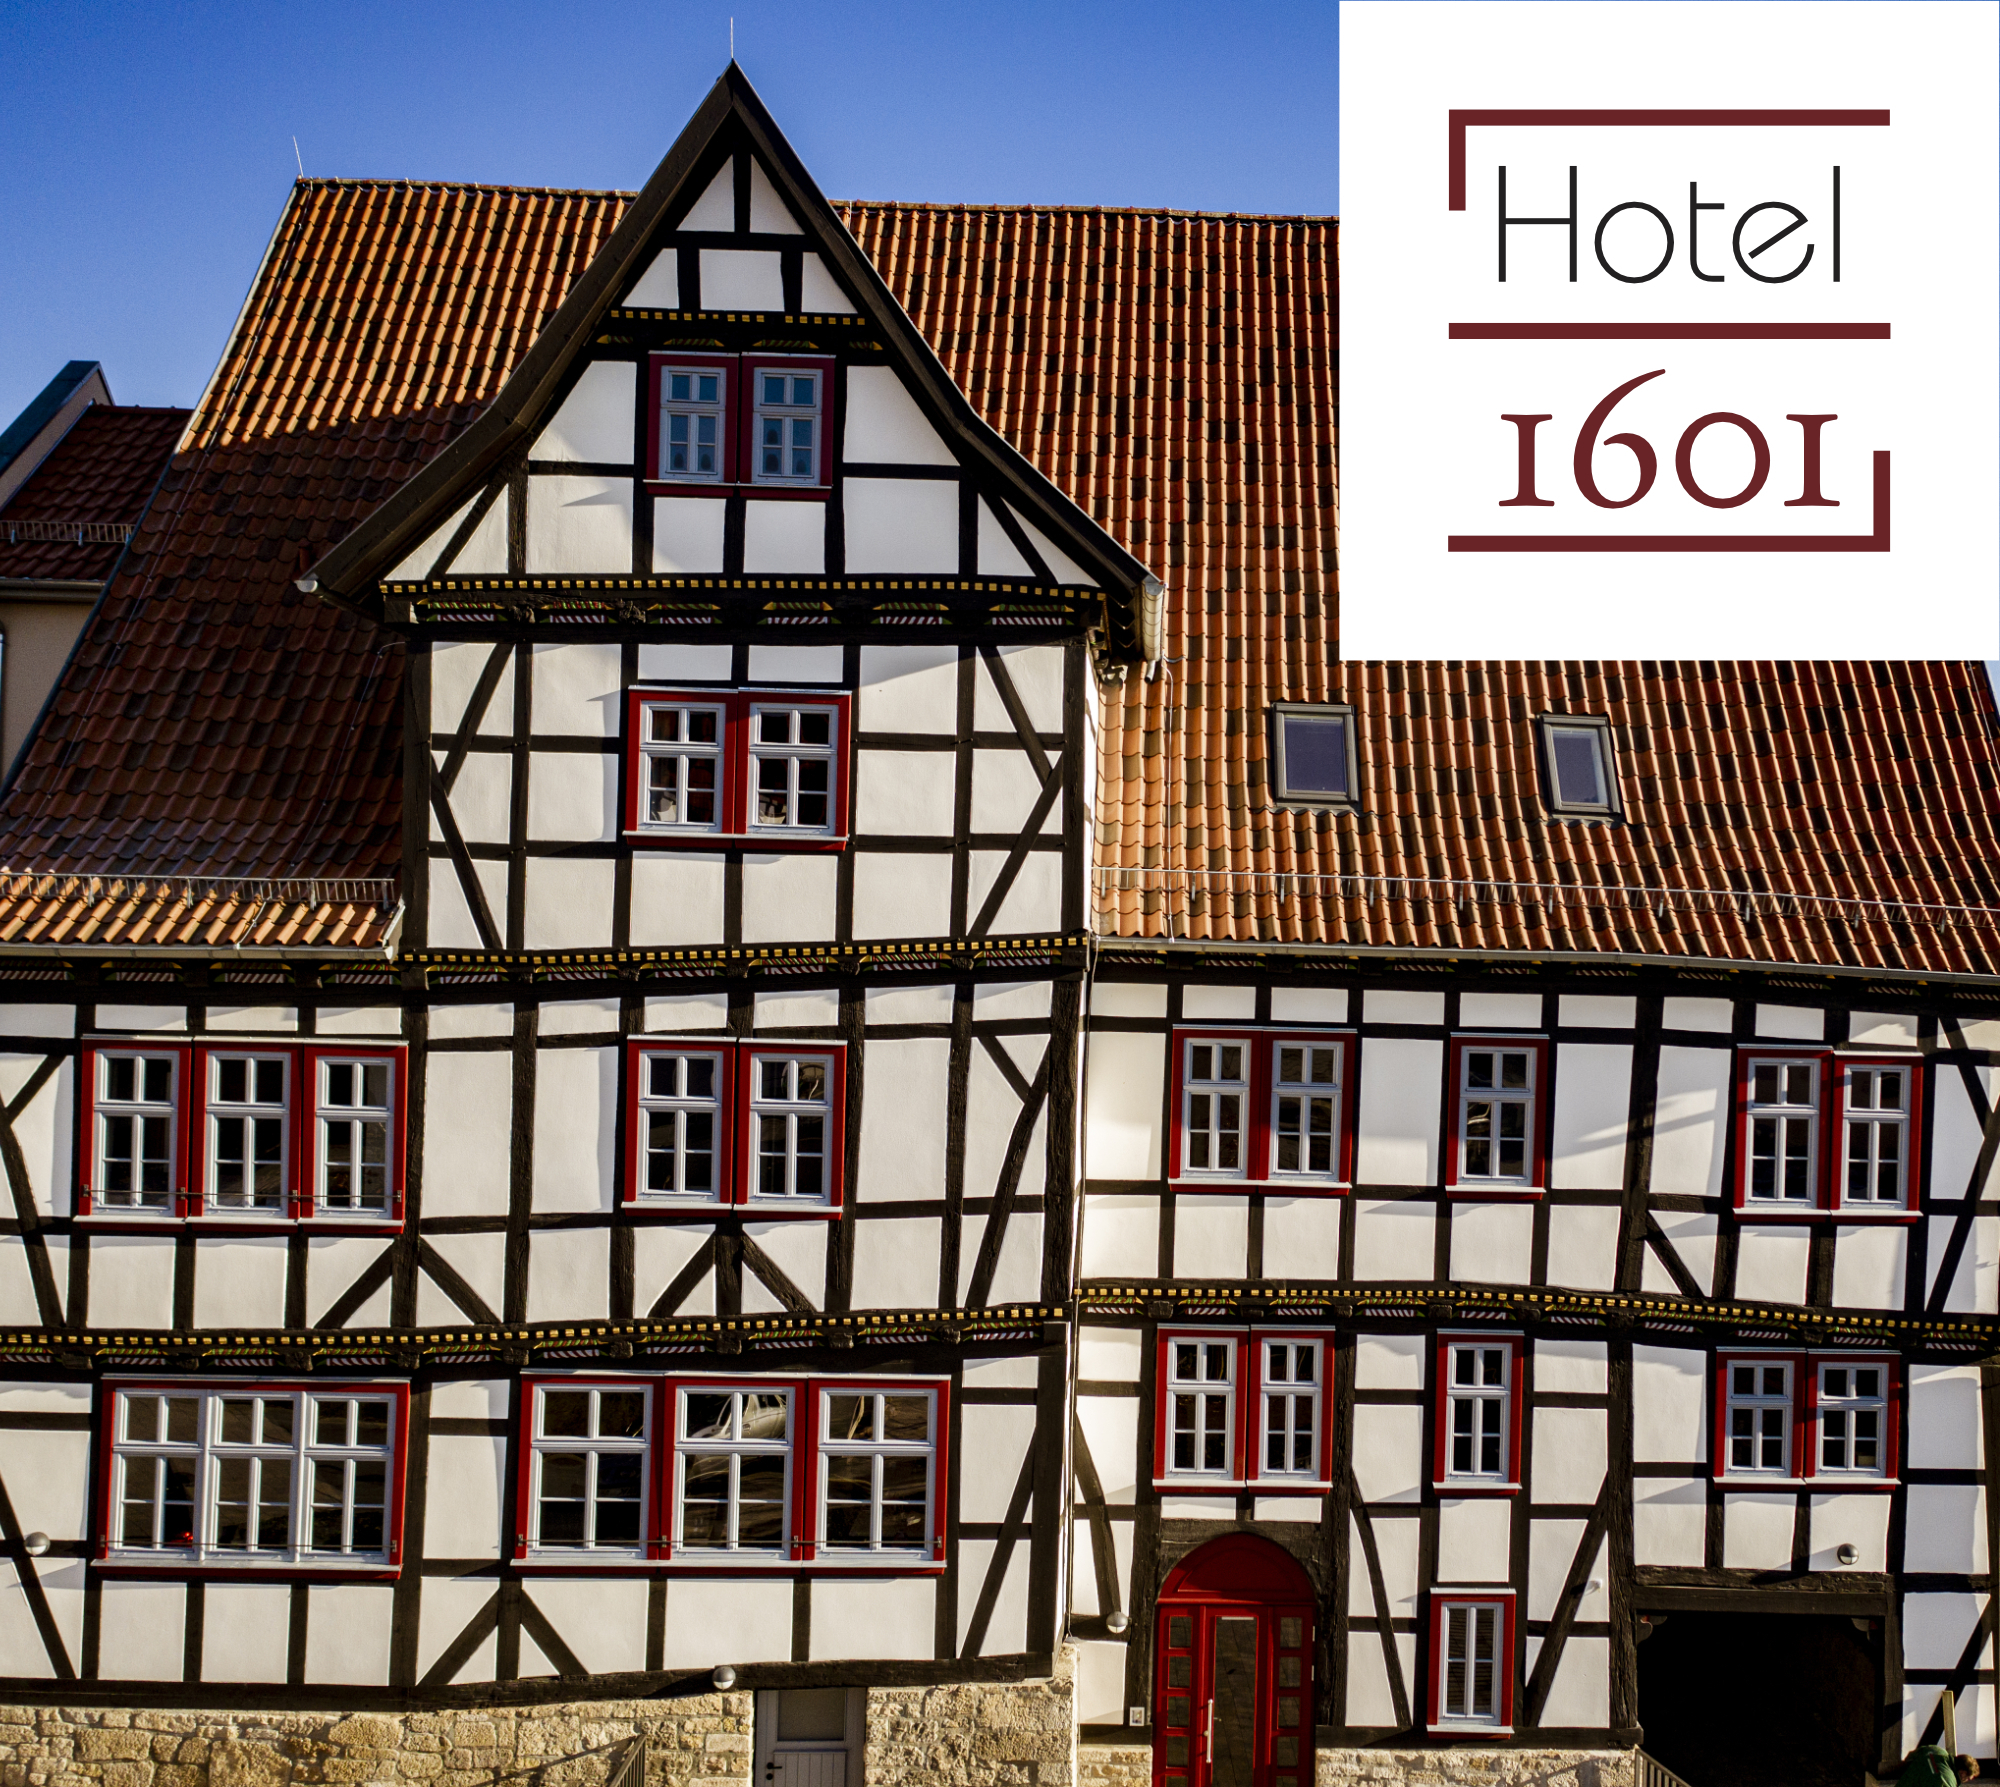 Hotel 1601 - ©Michael König